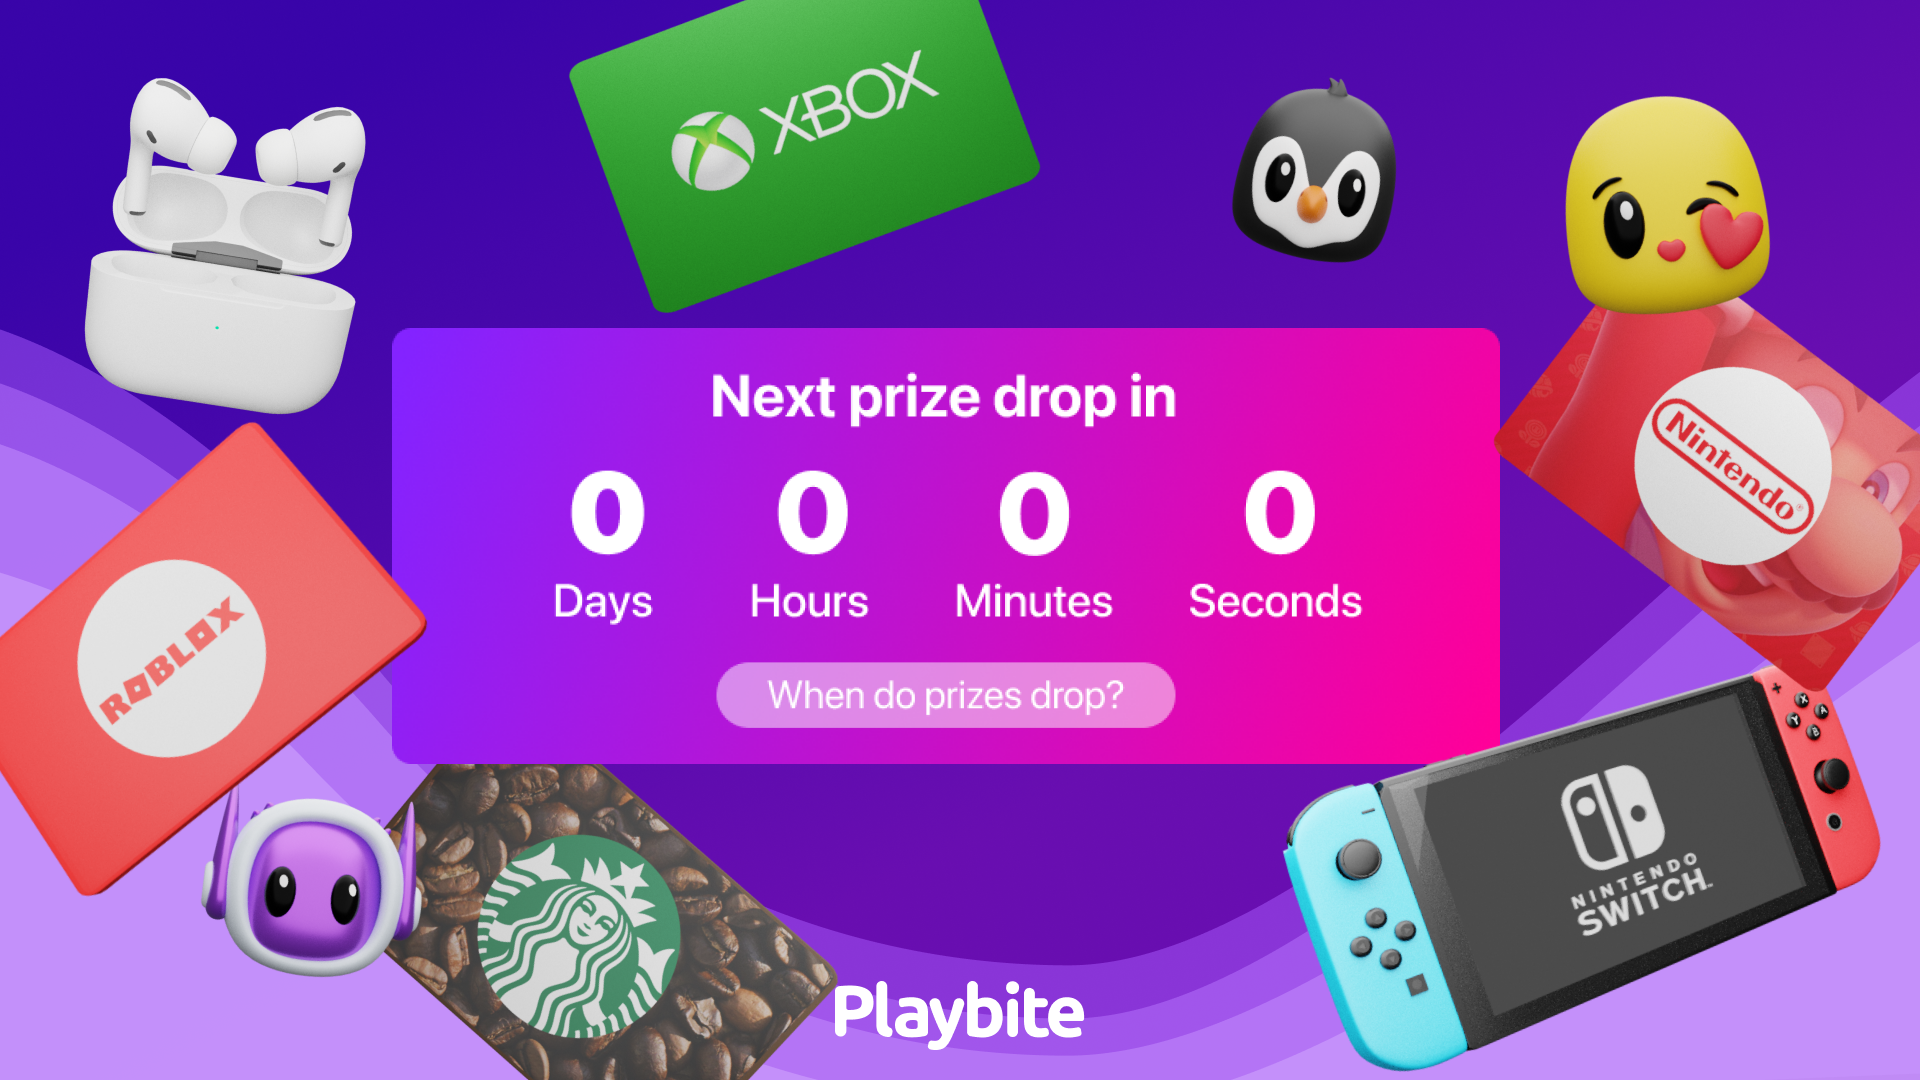 When do prizes drop?